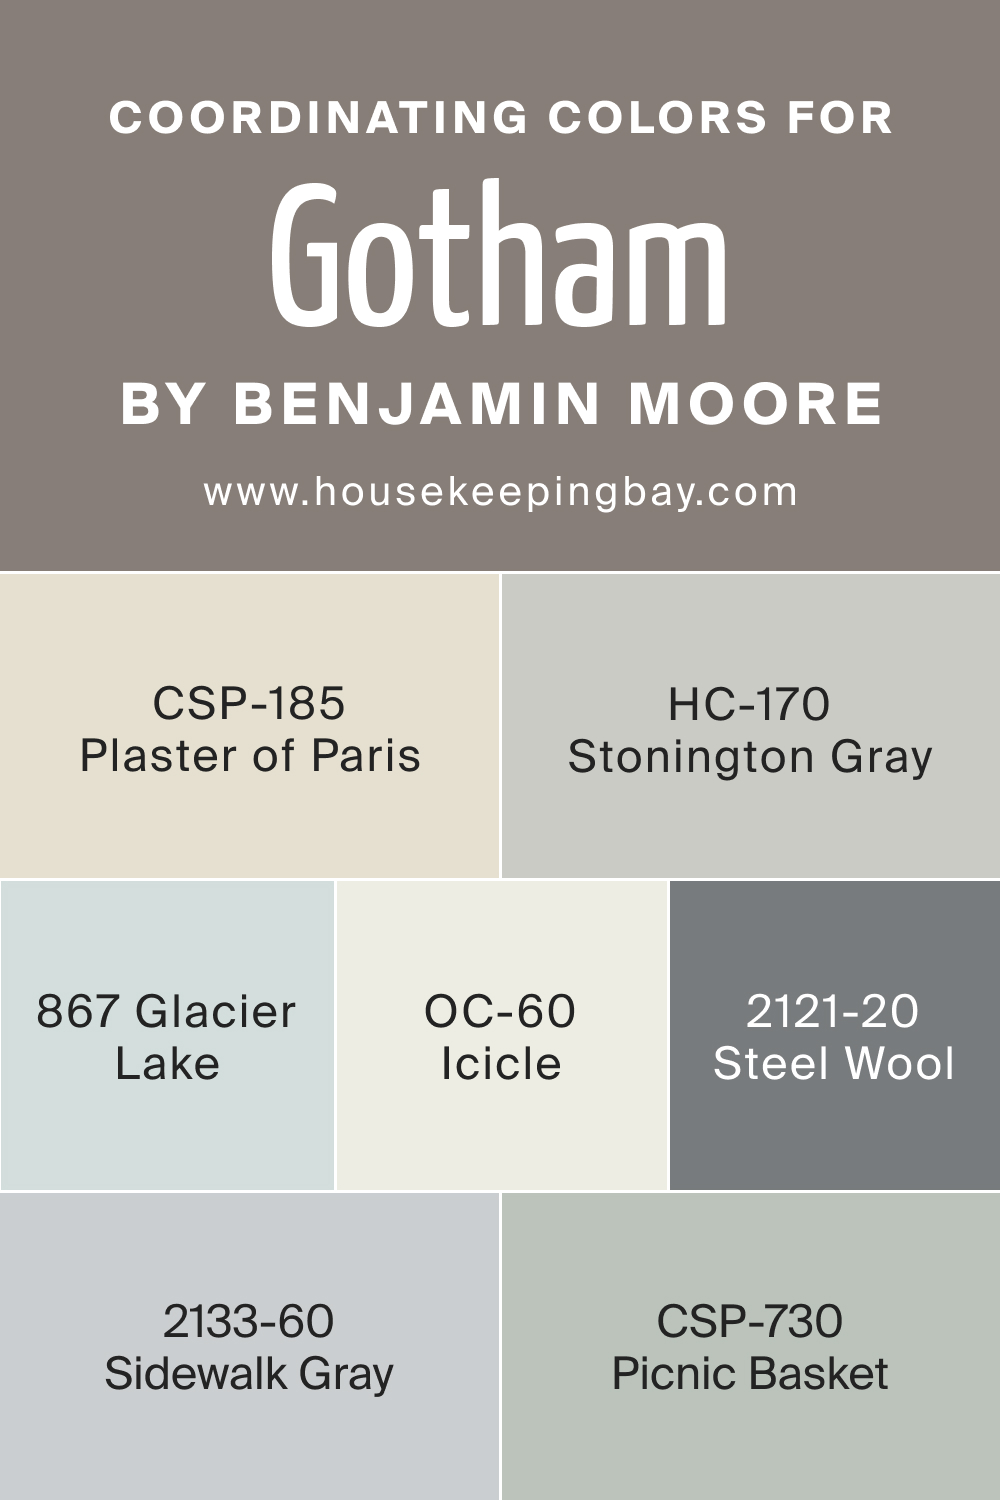 Coordinating Colors of Gotham CSP-385